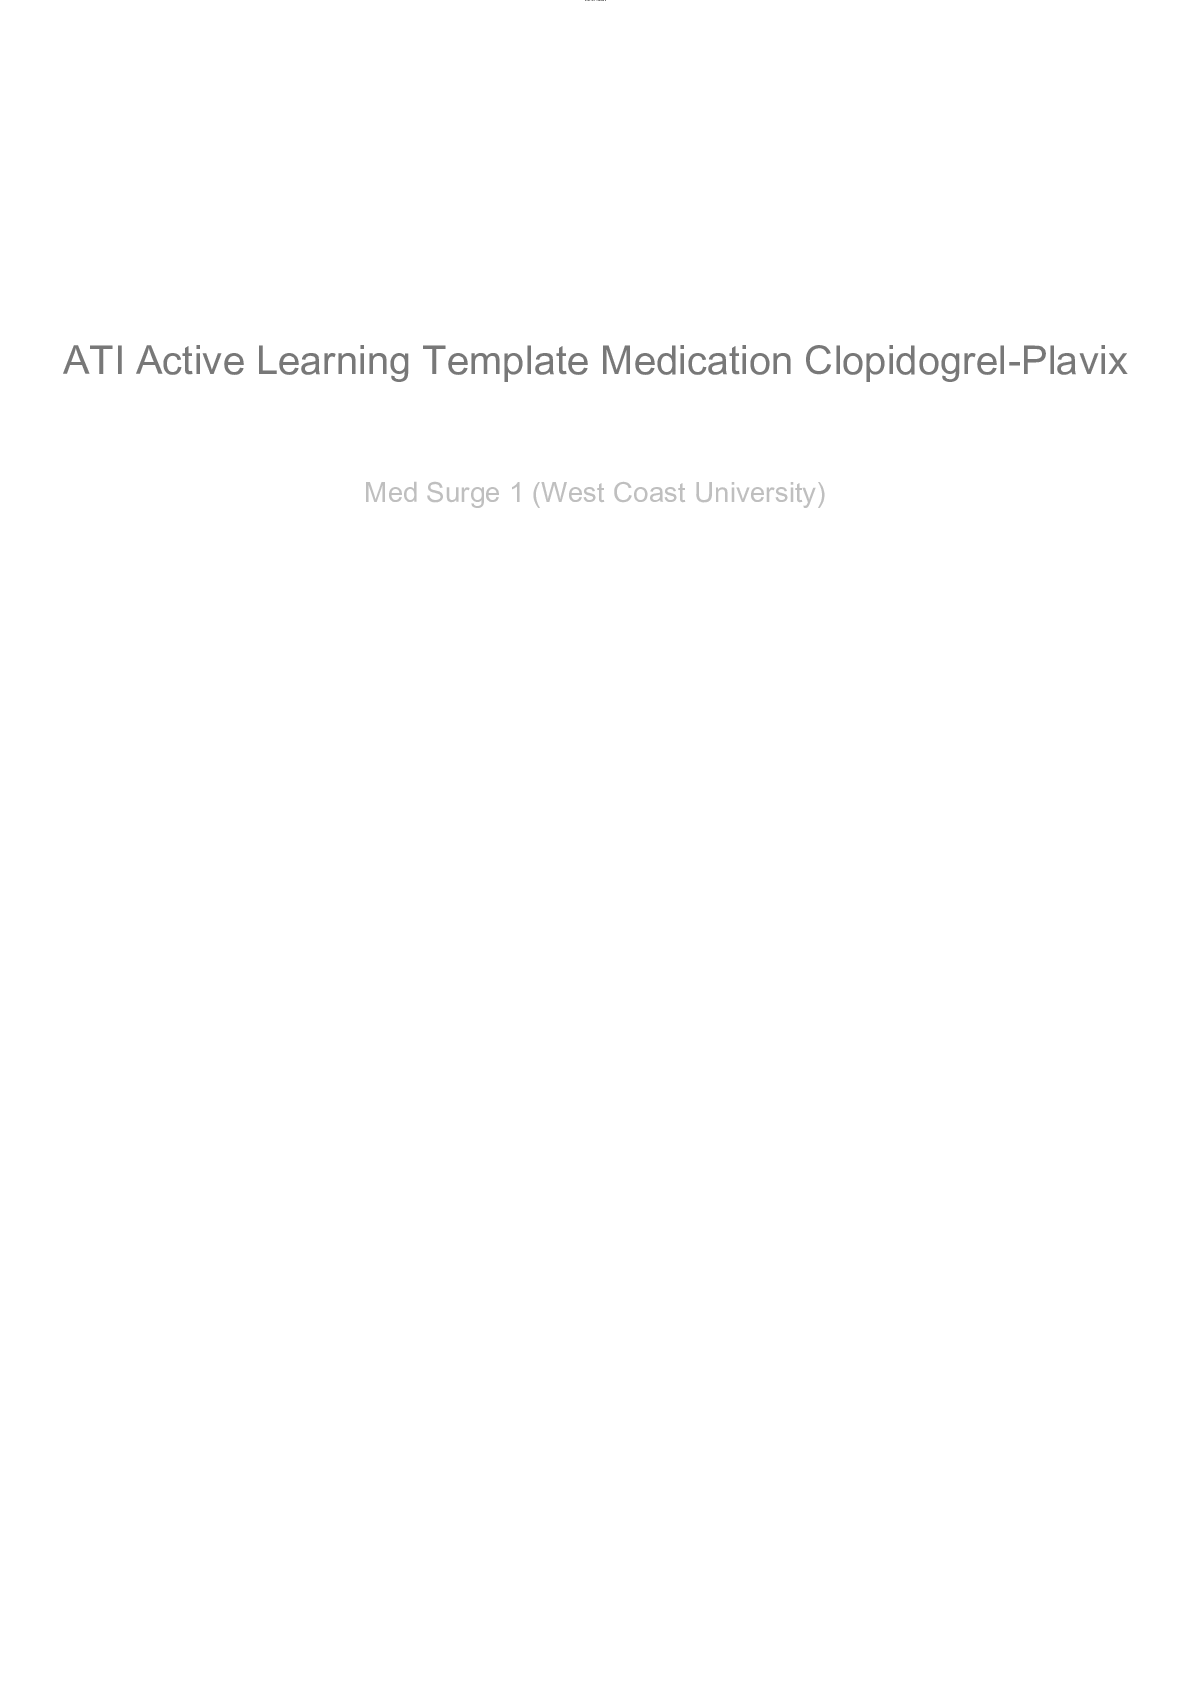 ATI Active Learning Template Medication ClopidogrelPlavix